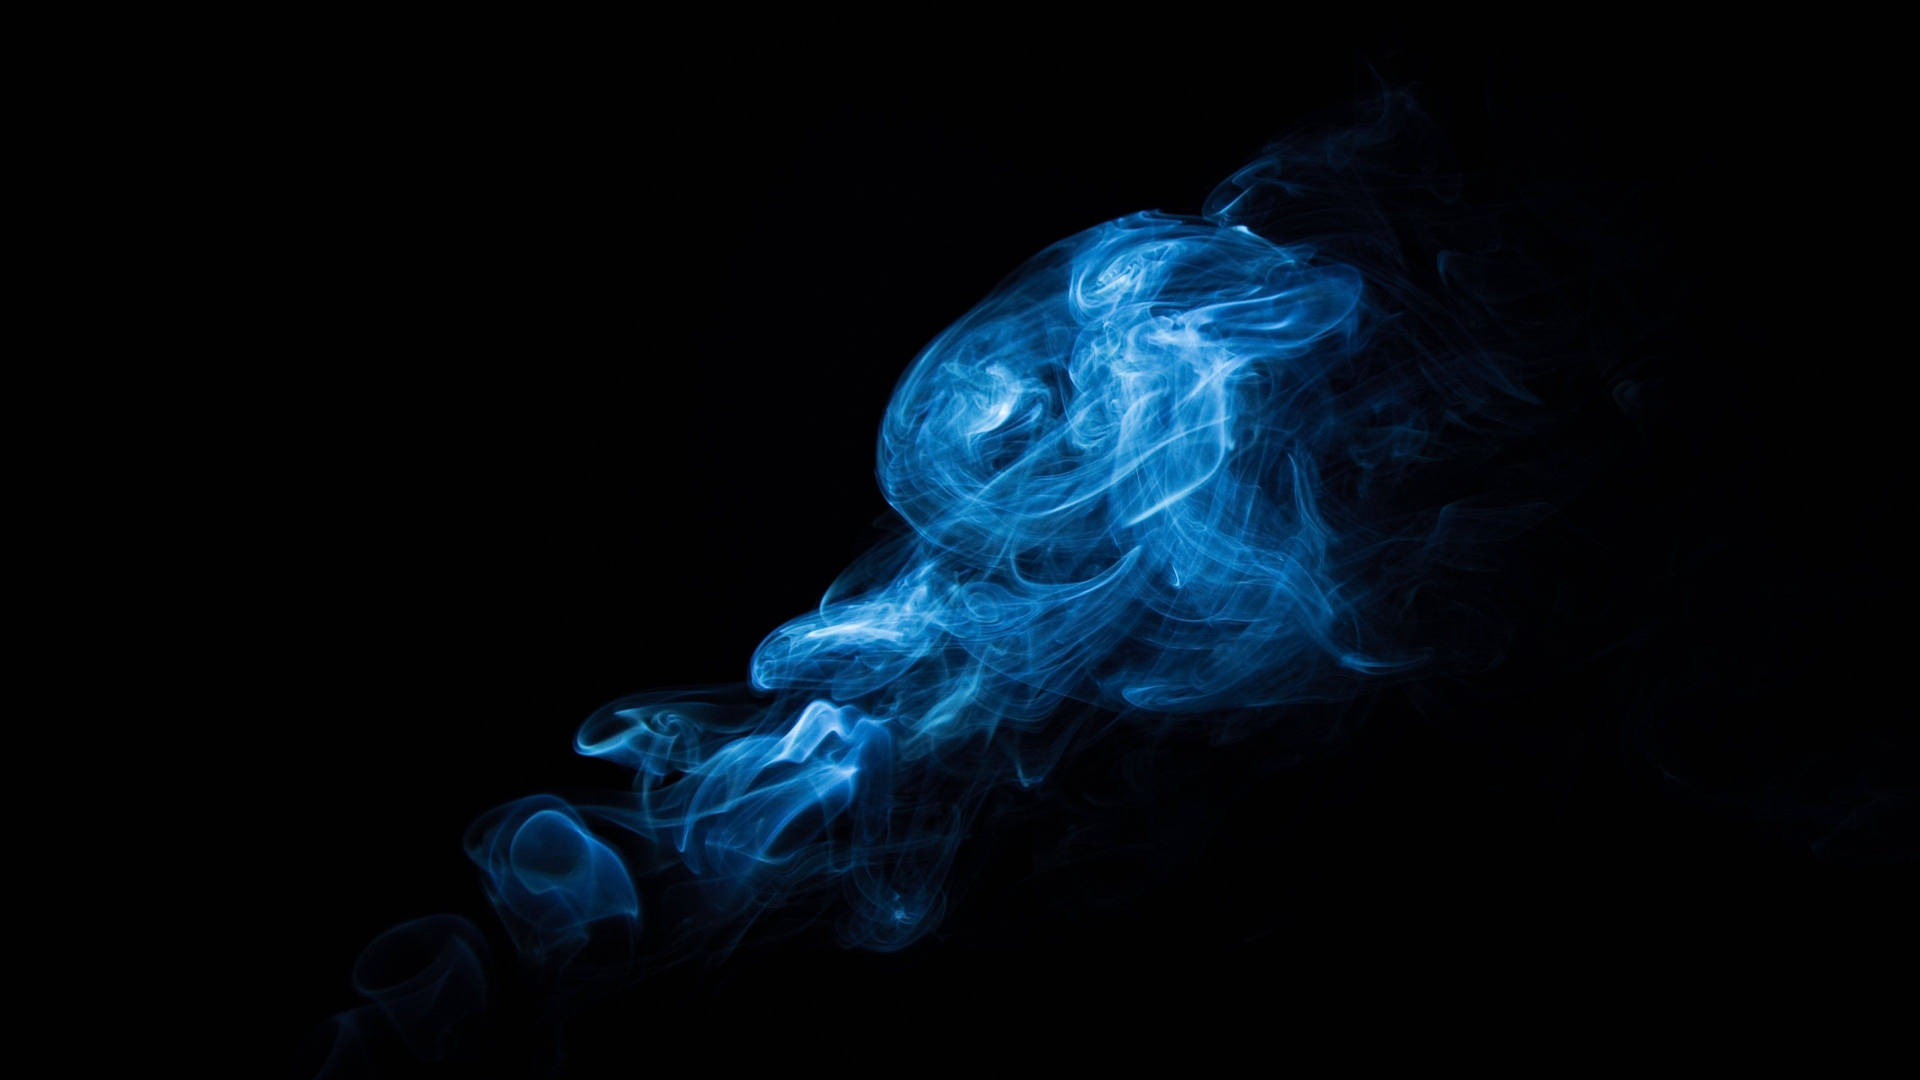 Caption: Majestic Blue Smoke With Striking White Streaks Background